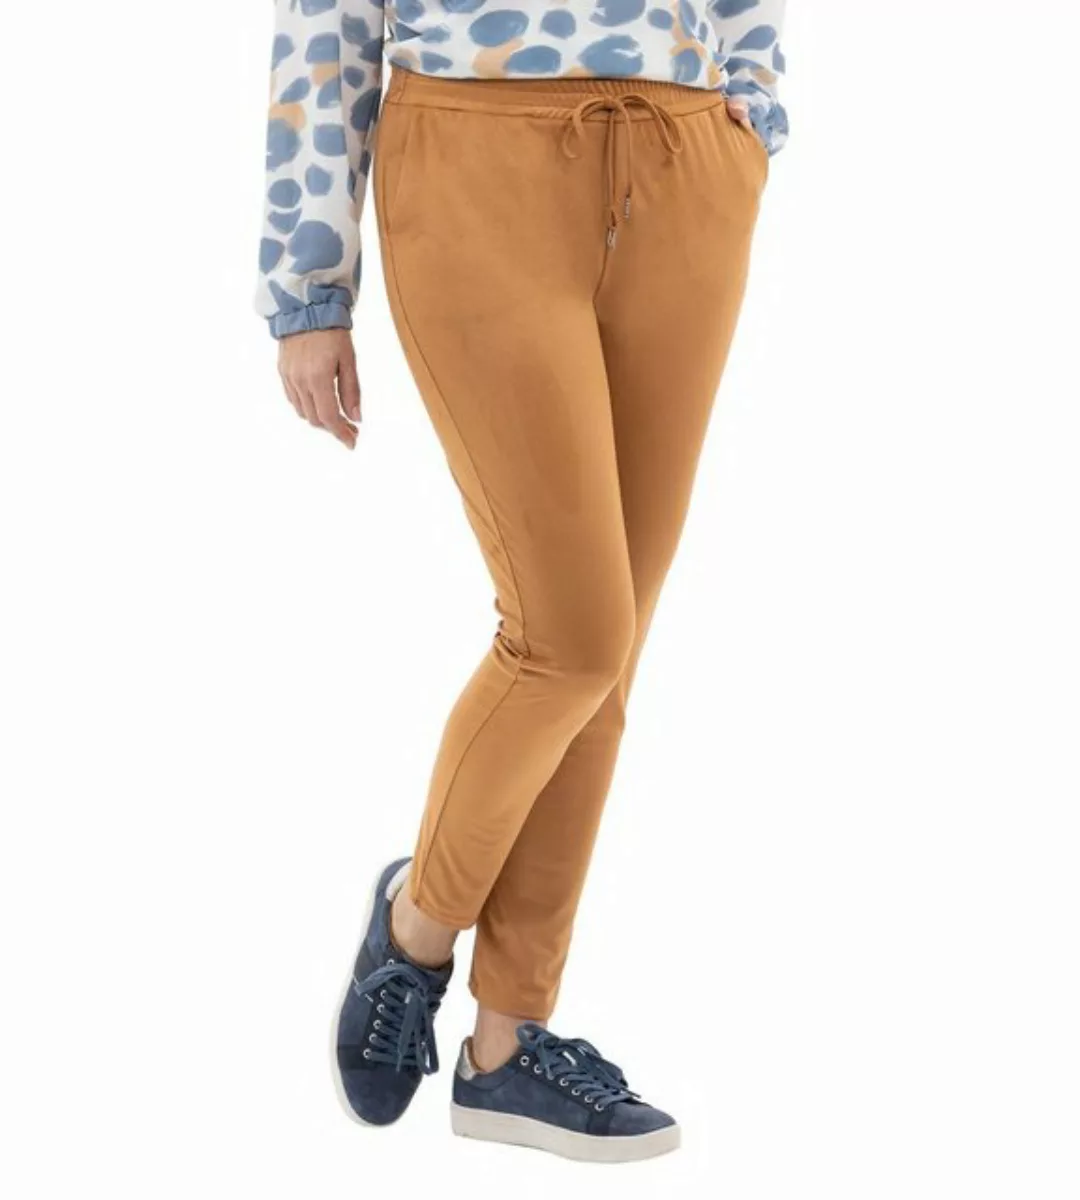 MONACO blue Jogger Pants Leggings koerpernah in Velourslederoptik günstig online kaufen